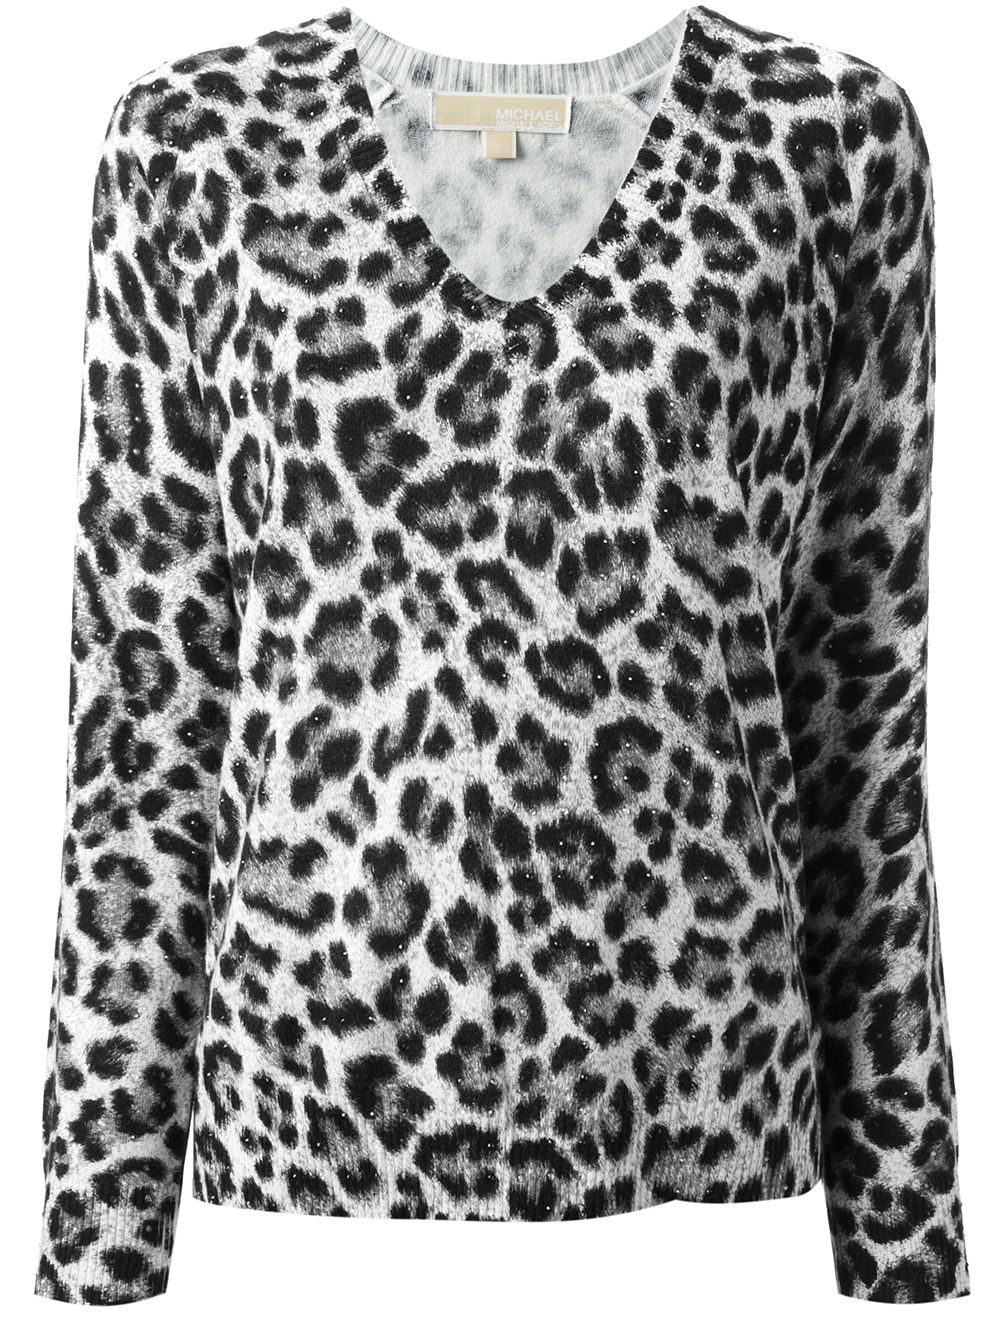 michael kors leopard sweater